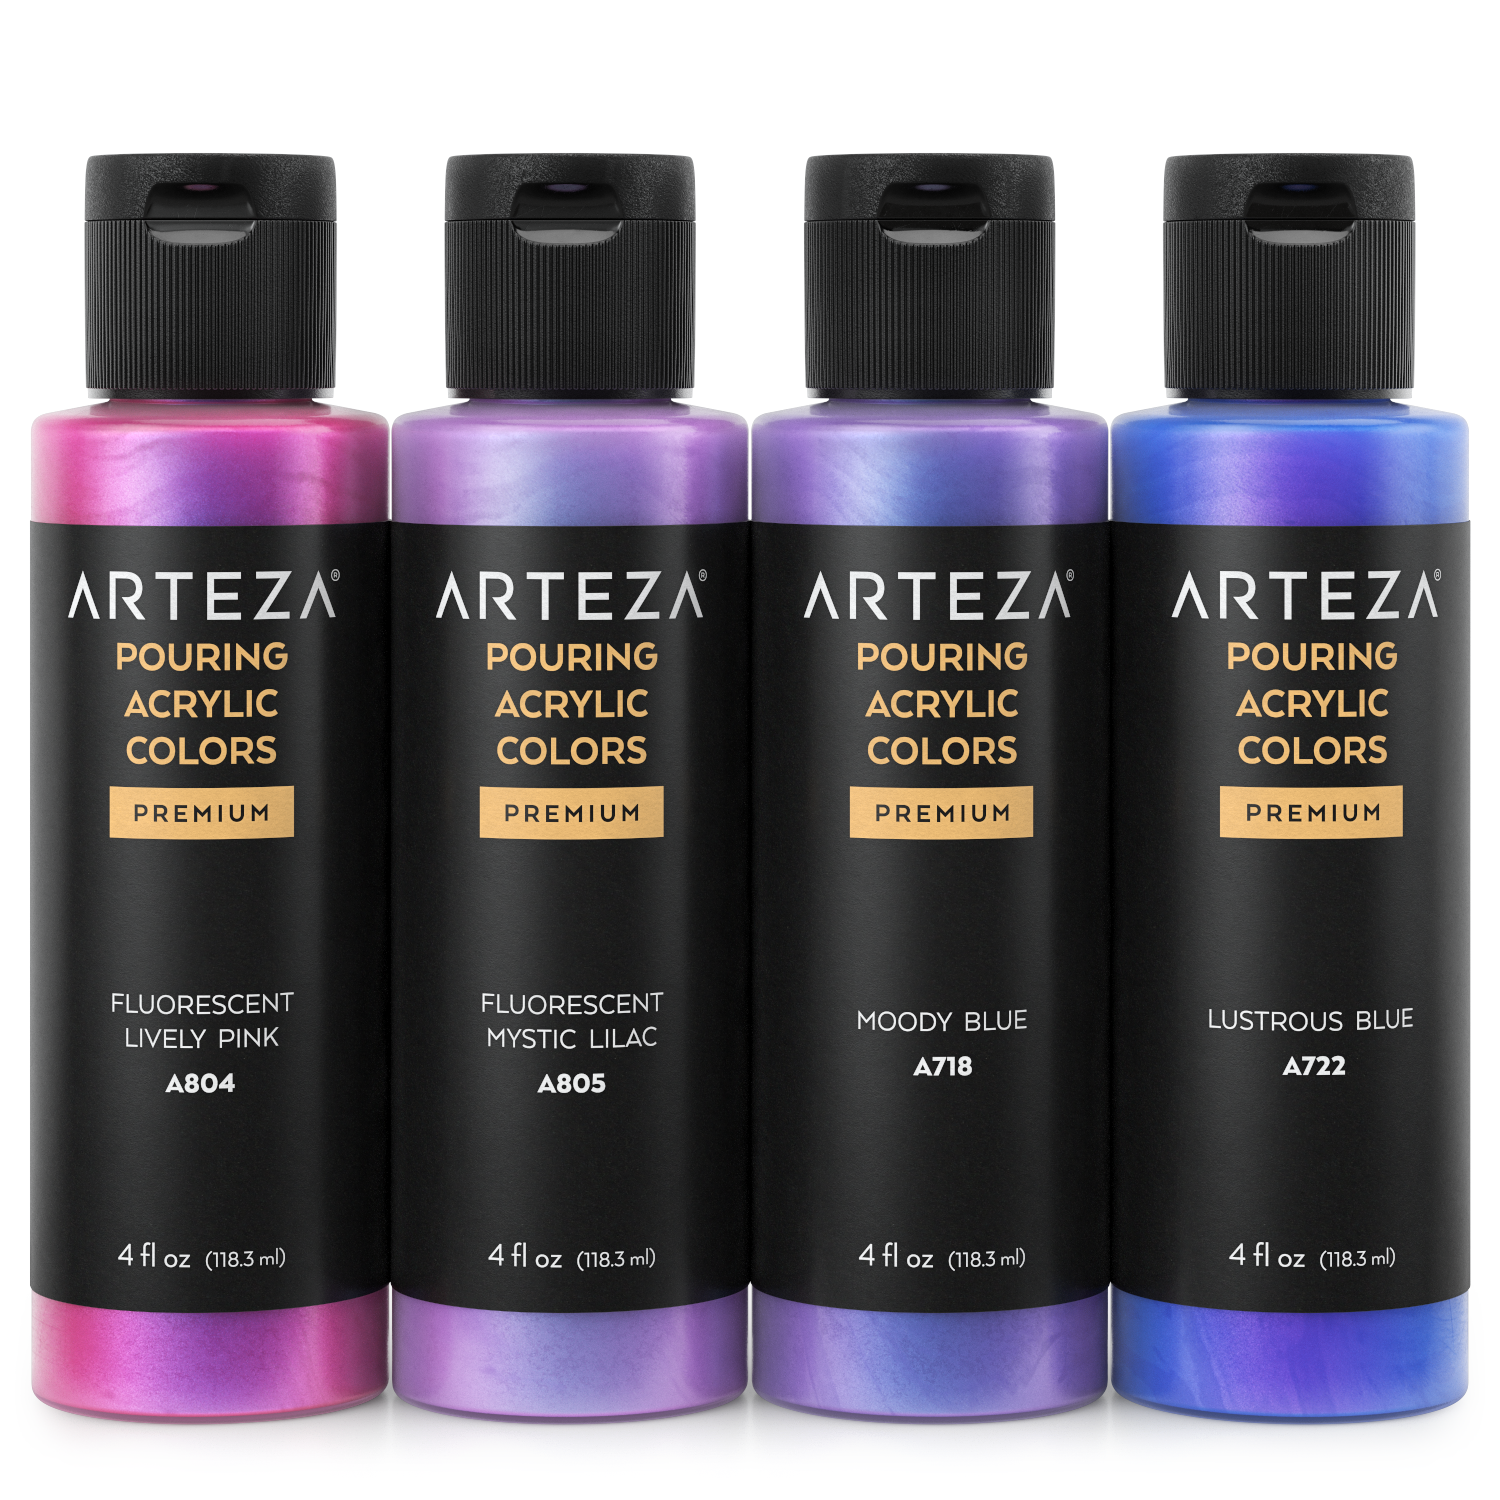 Arteza Pouring Acrylic Paints, Iridescent Mystic Tones, 4oz Bottles - Set of 4